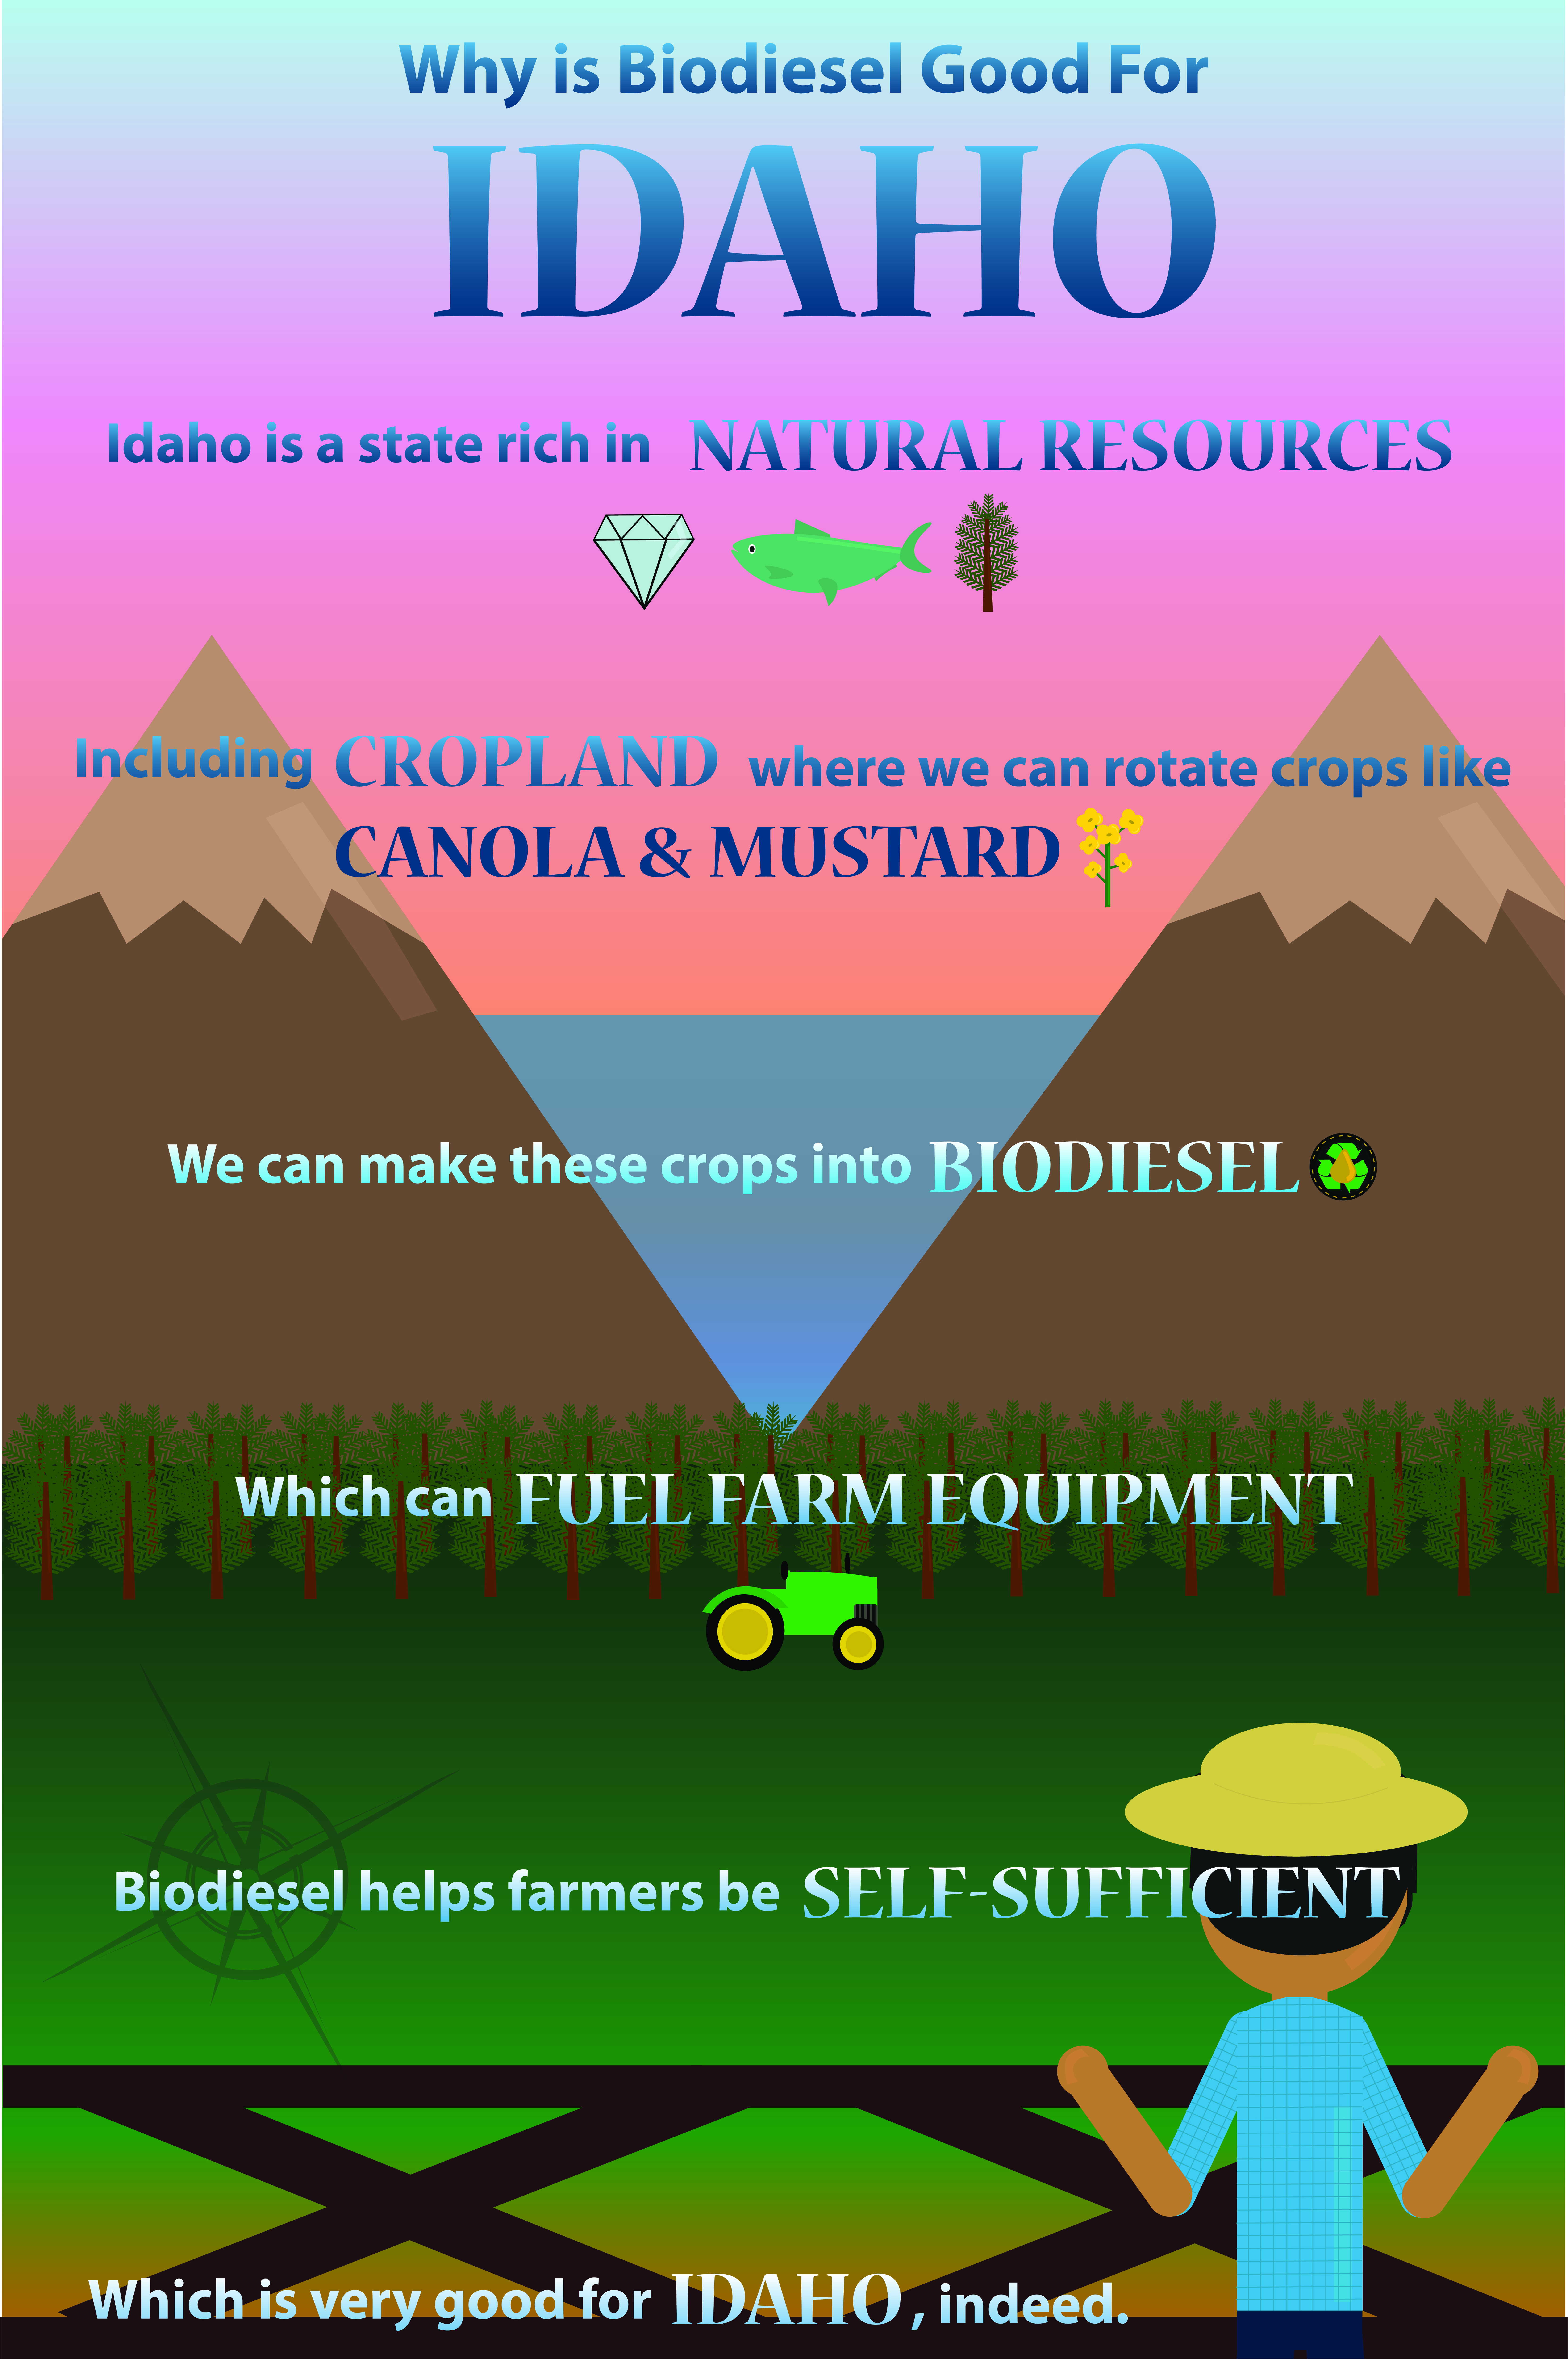 Idaho and Biodiesel